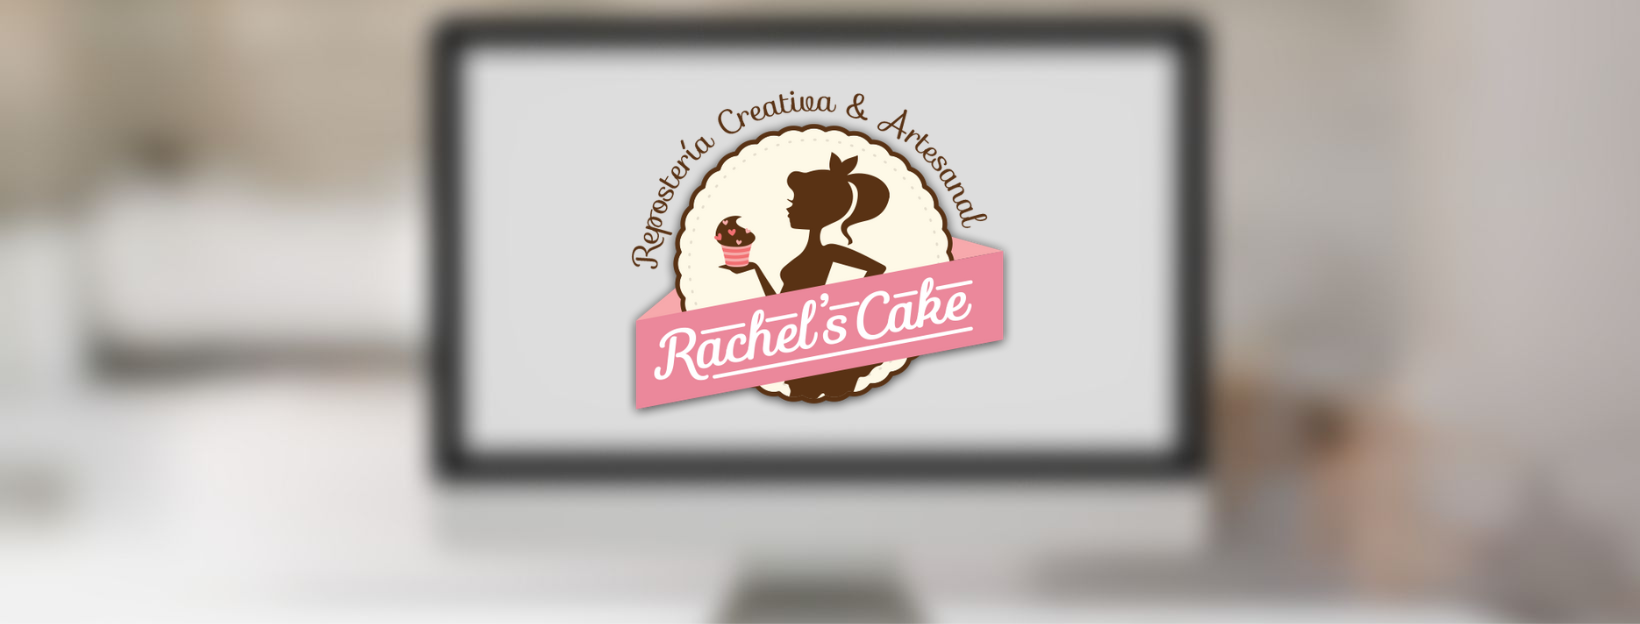 SEO for Rachel’s Cake online shop